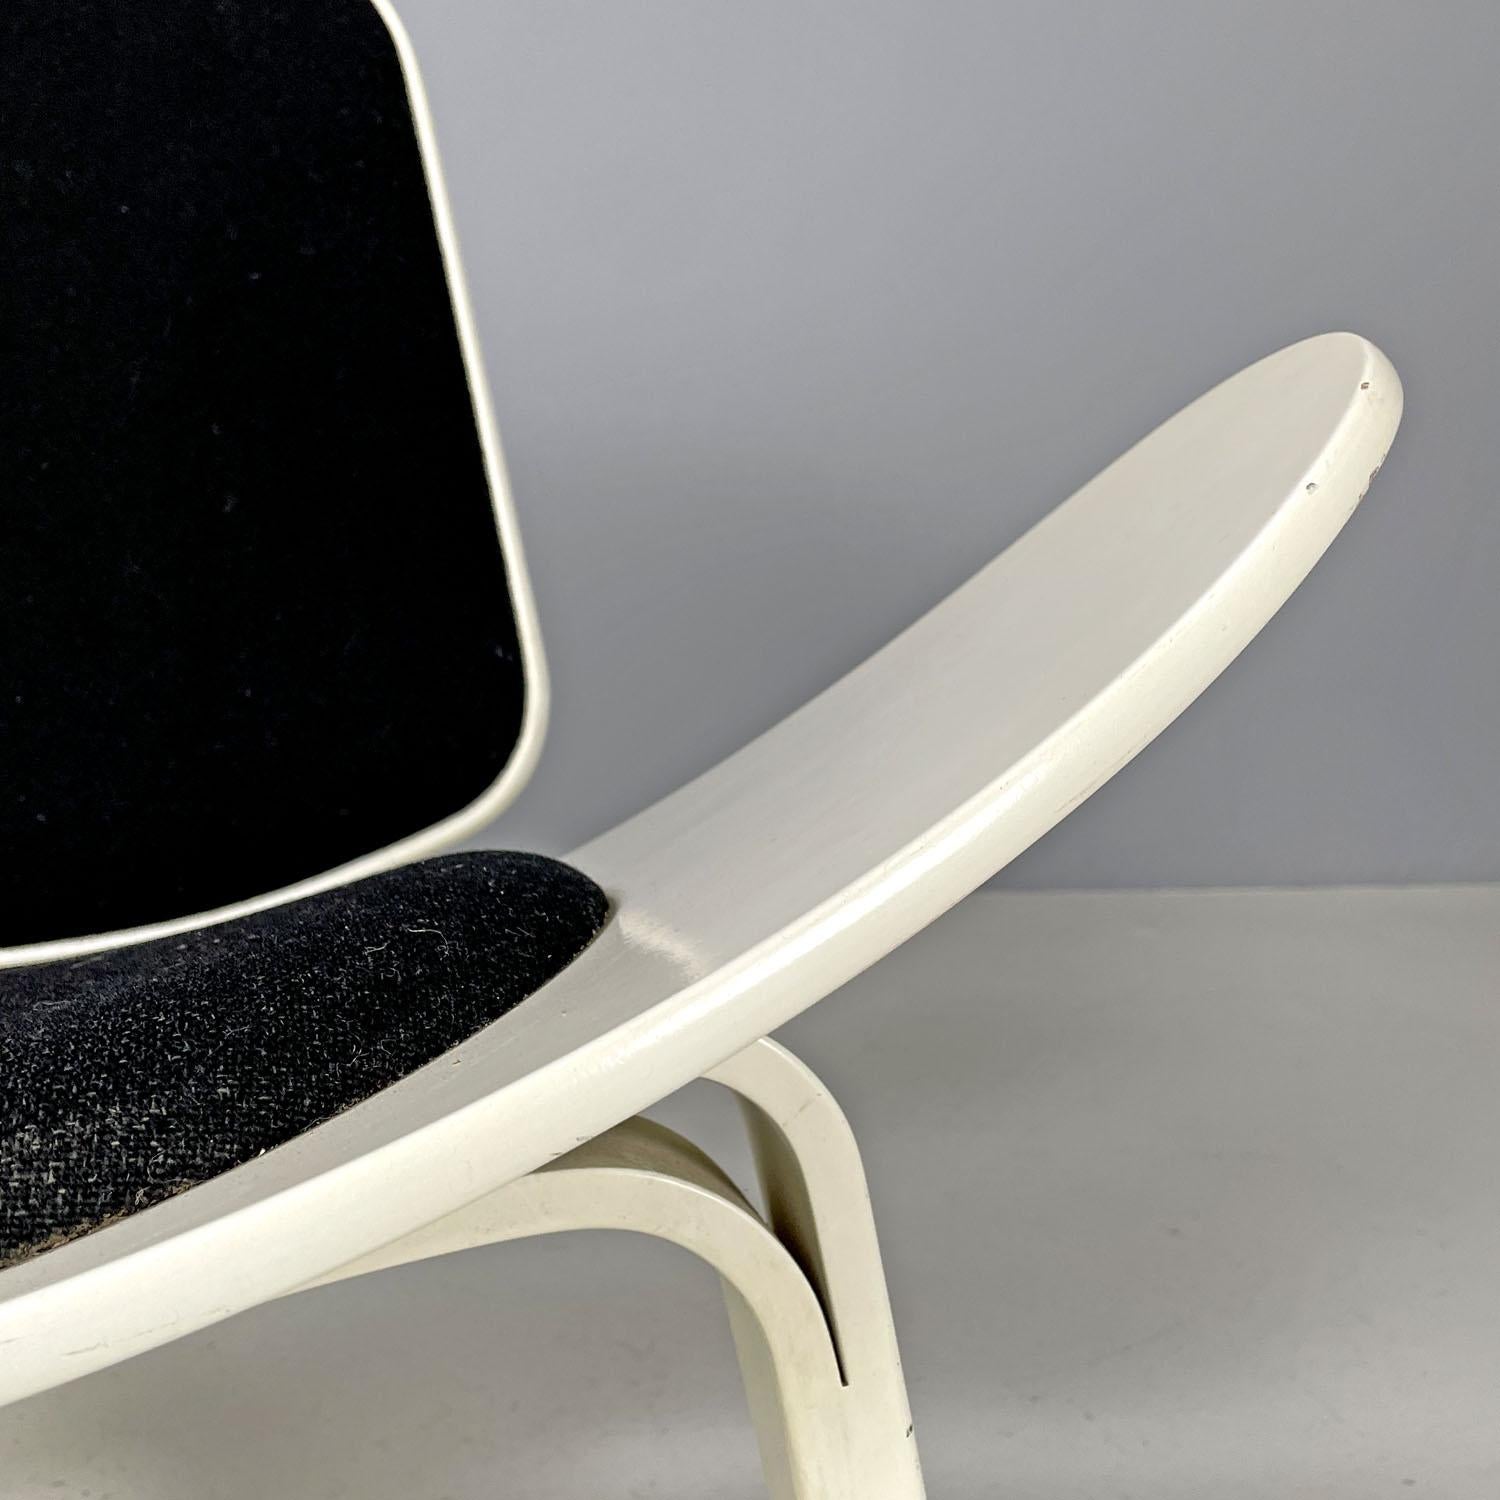 Danish wooden shell armchair CH07 by Hans Wegner for Carl Hansen & Søn, 2000s For Sale 1